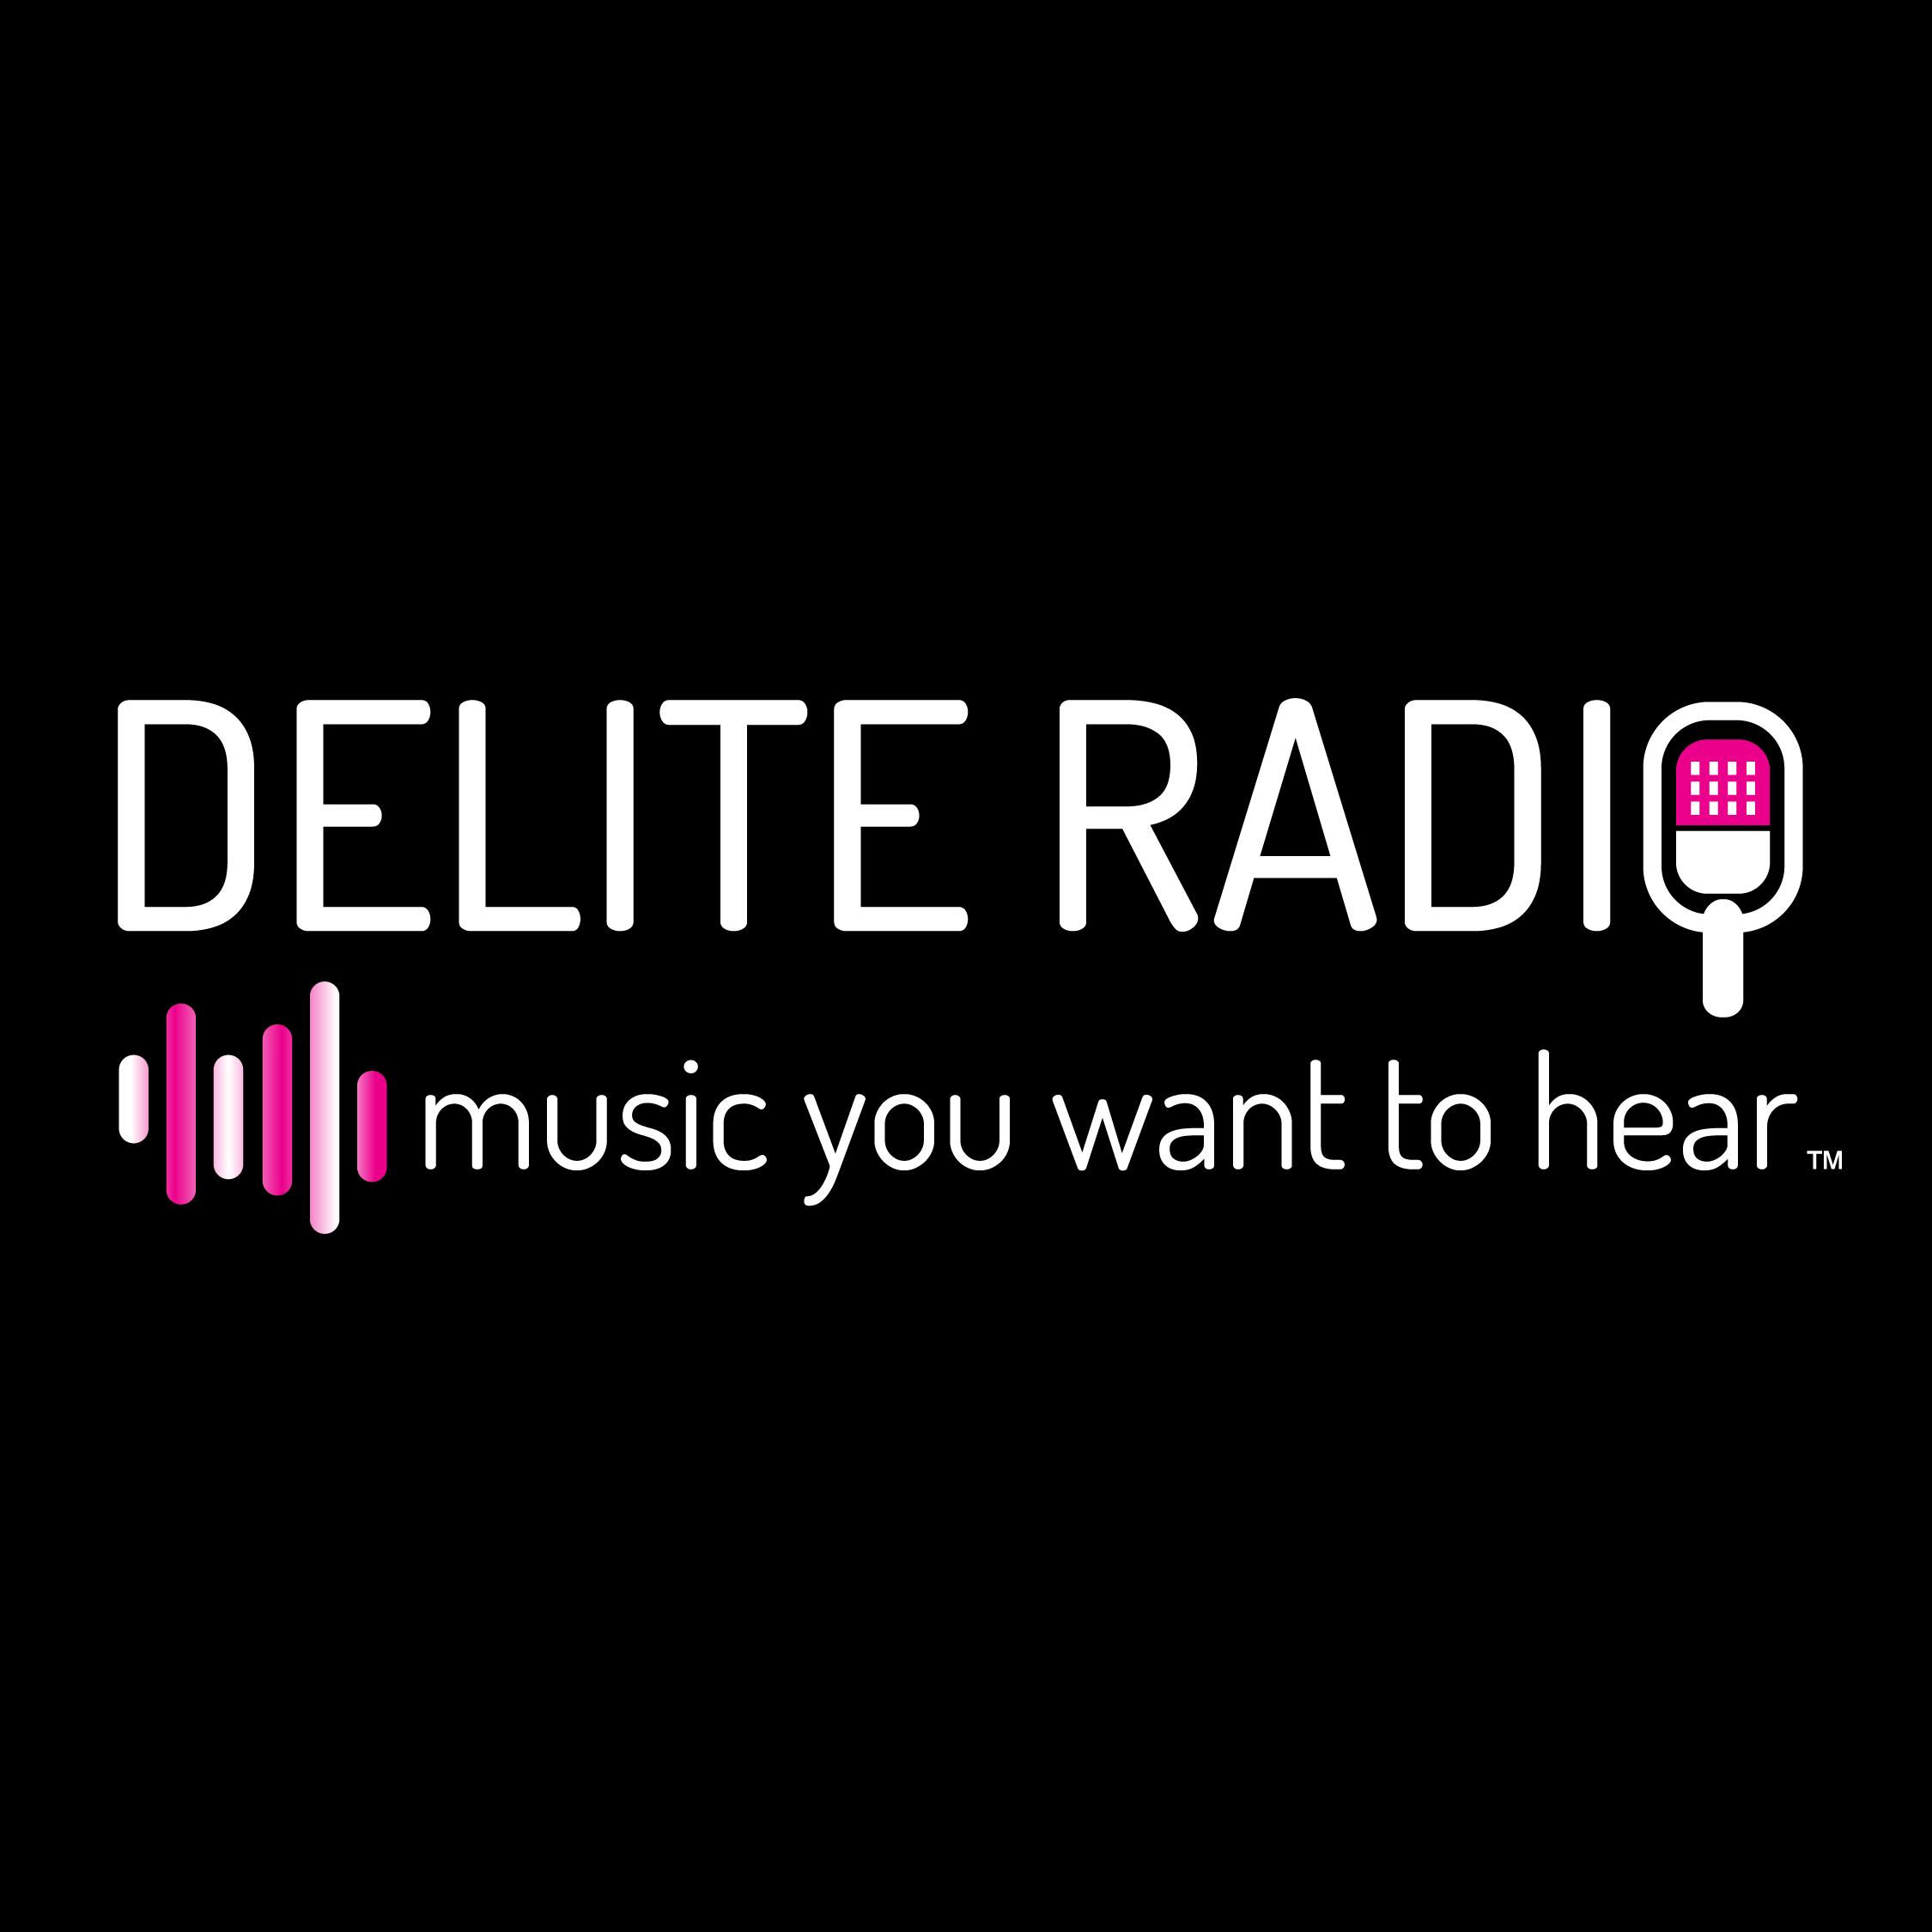 DeliteRadio-music you want to hear BLACK_Instagram_1080x1080px.jpg (231 KB)